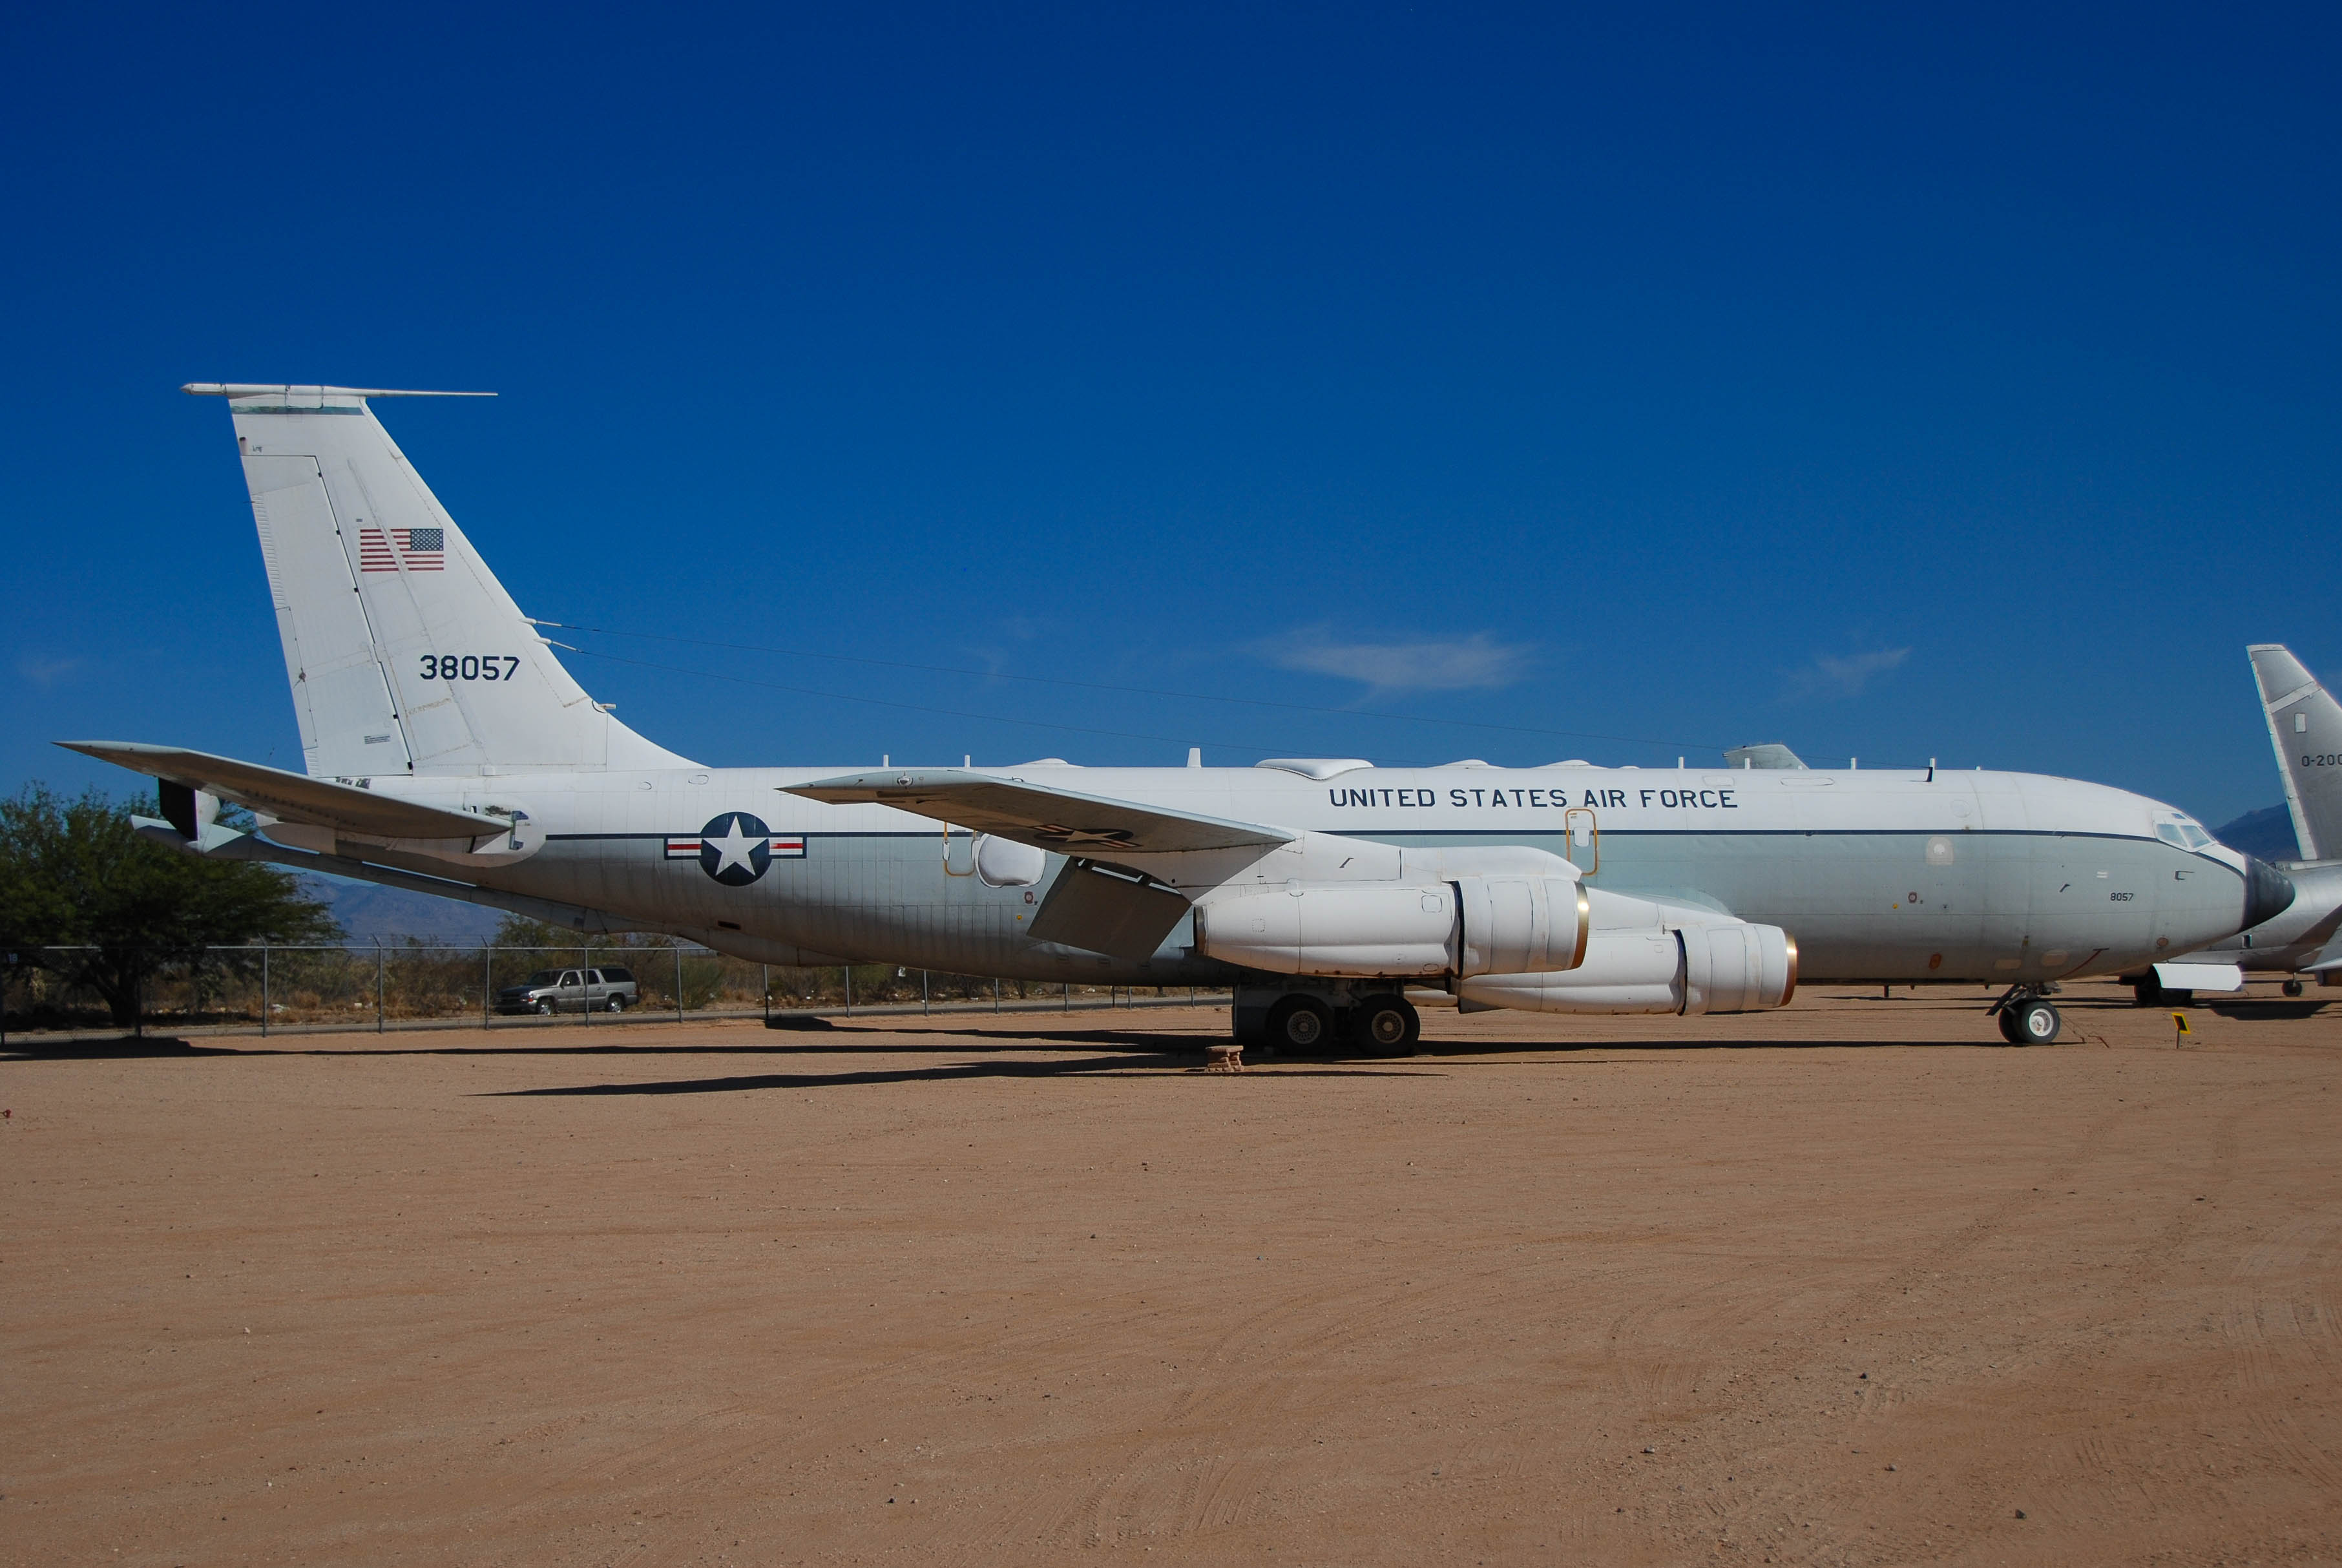 63-8057/638057 Preserved Boeing C-135 Stratotanker Airframe Information - AVSpotters.com